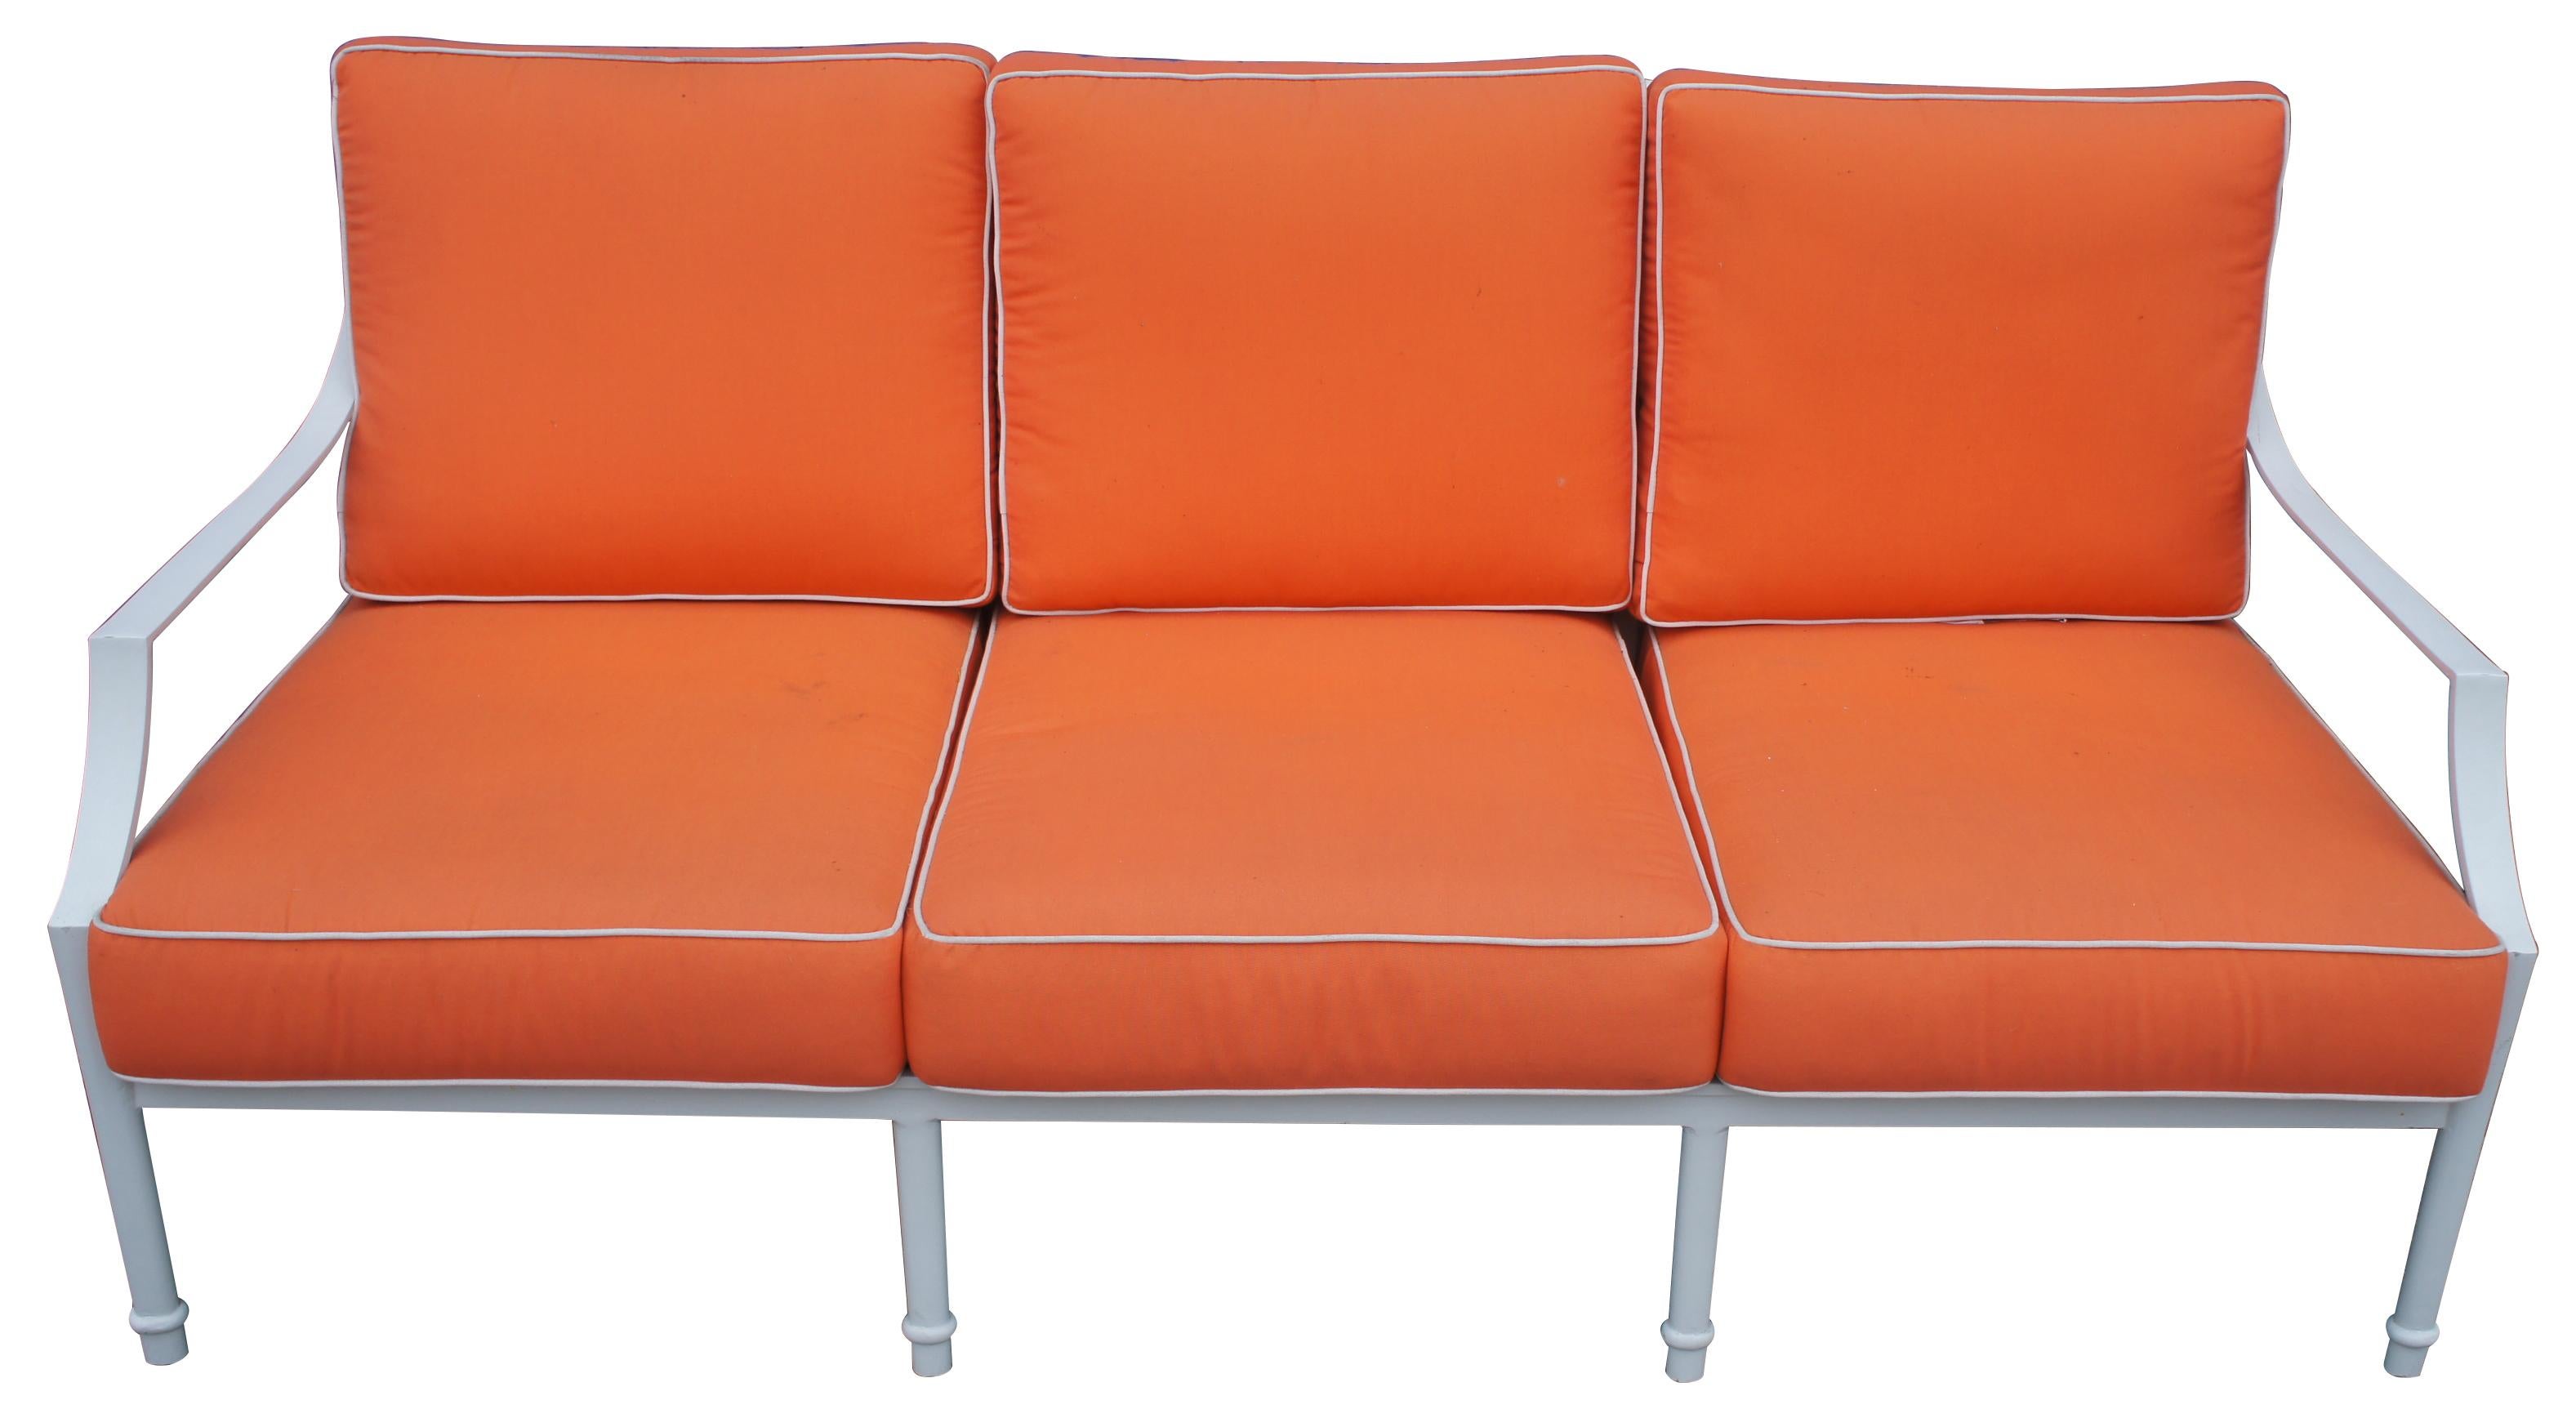 French Provincial Grayson French Inspired Aluminum Sofa with Orange Cushions & Lattice Back 28070